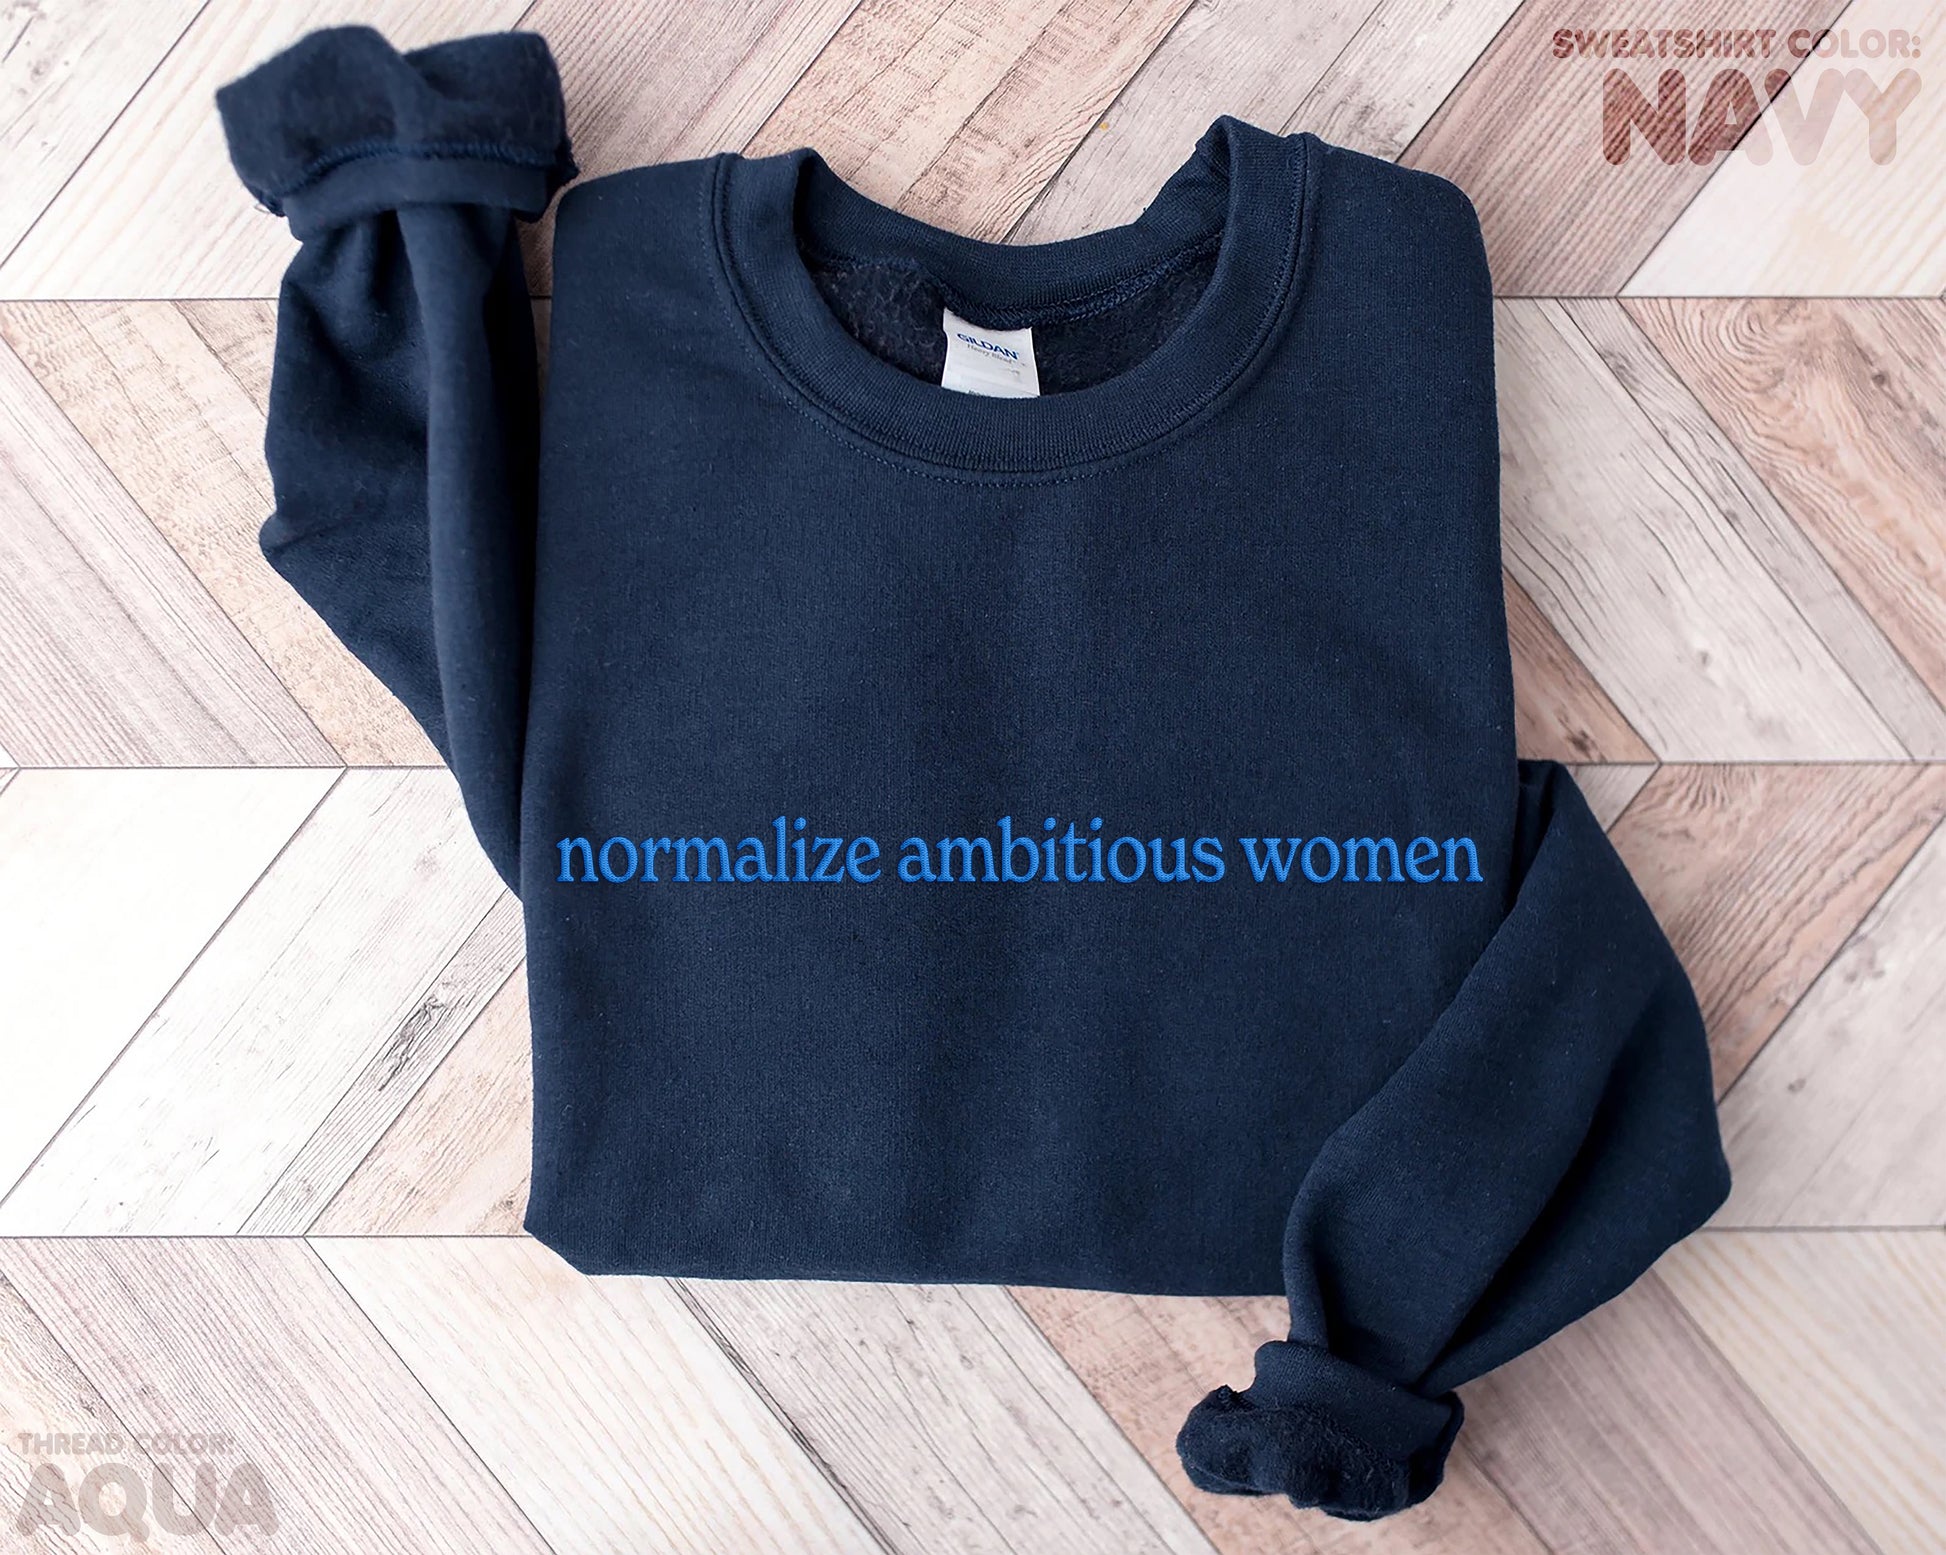 Normalize Ambitious Women Sweatshirt 